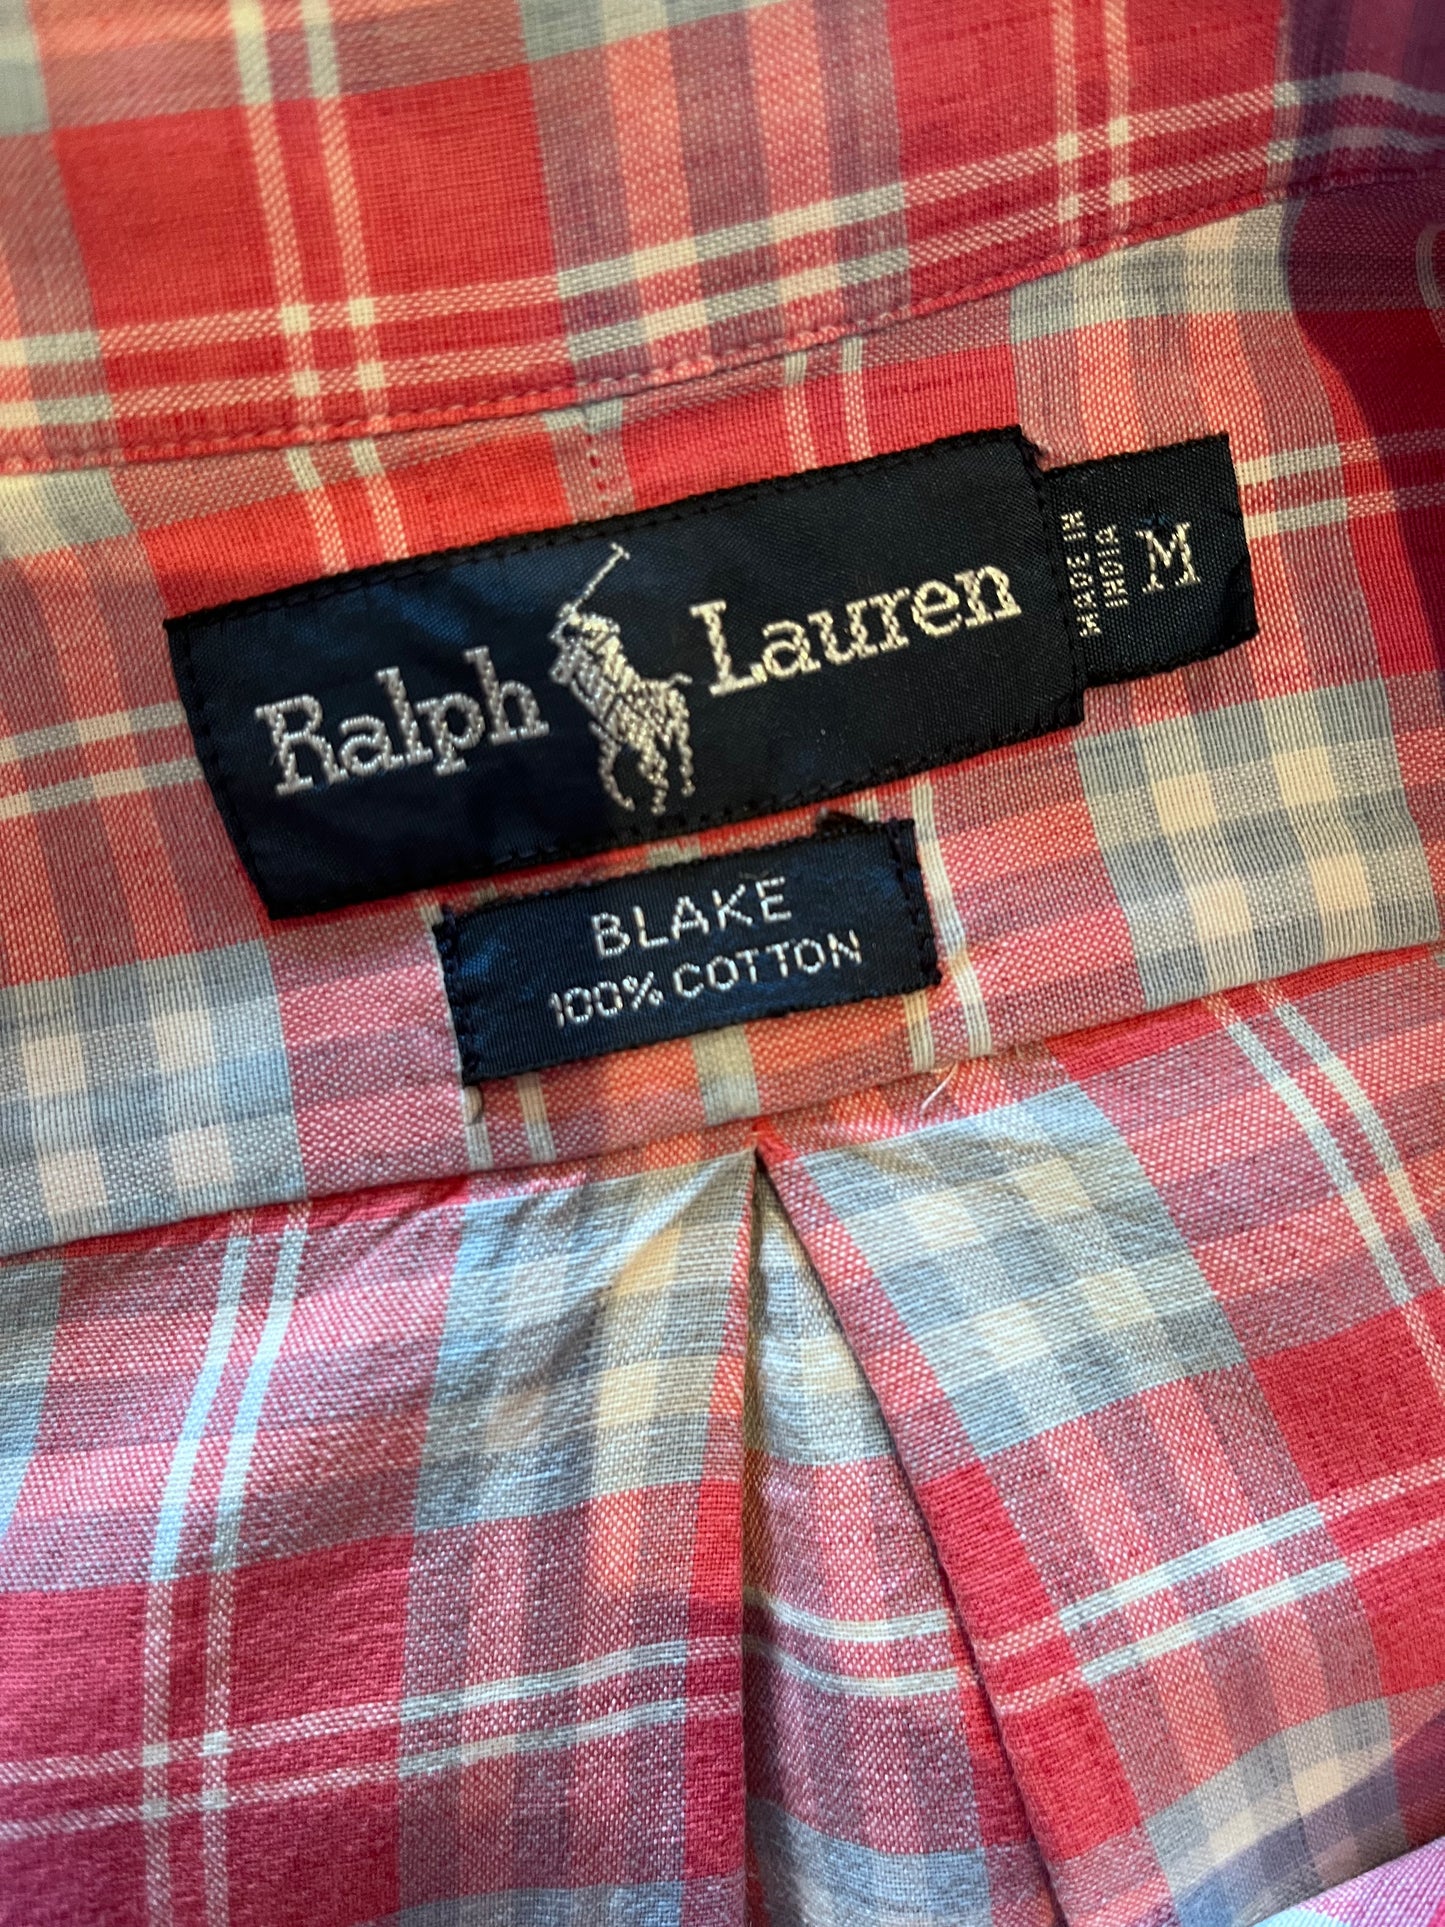 Ralph Lauren 100% Cotton Pink Check Shirt Size US M UK Large Classic Fit Button Down Collar